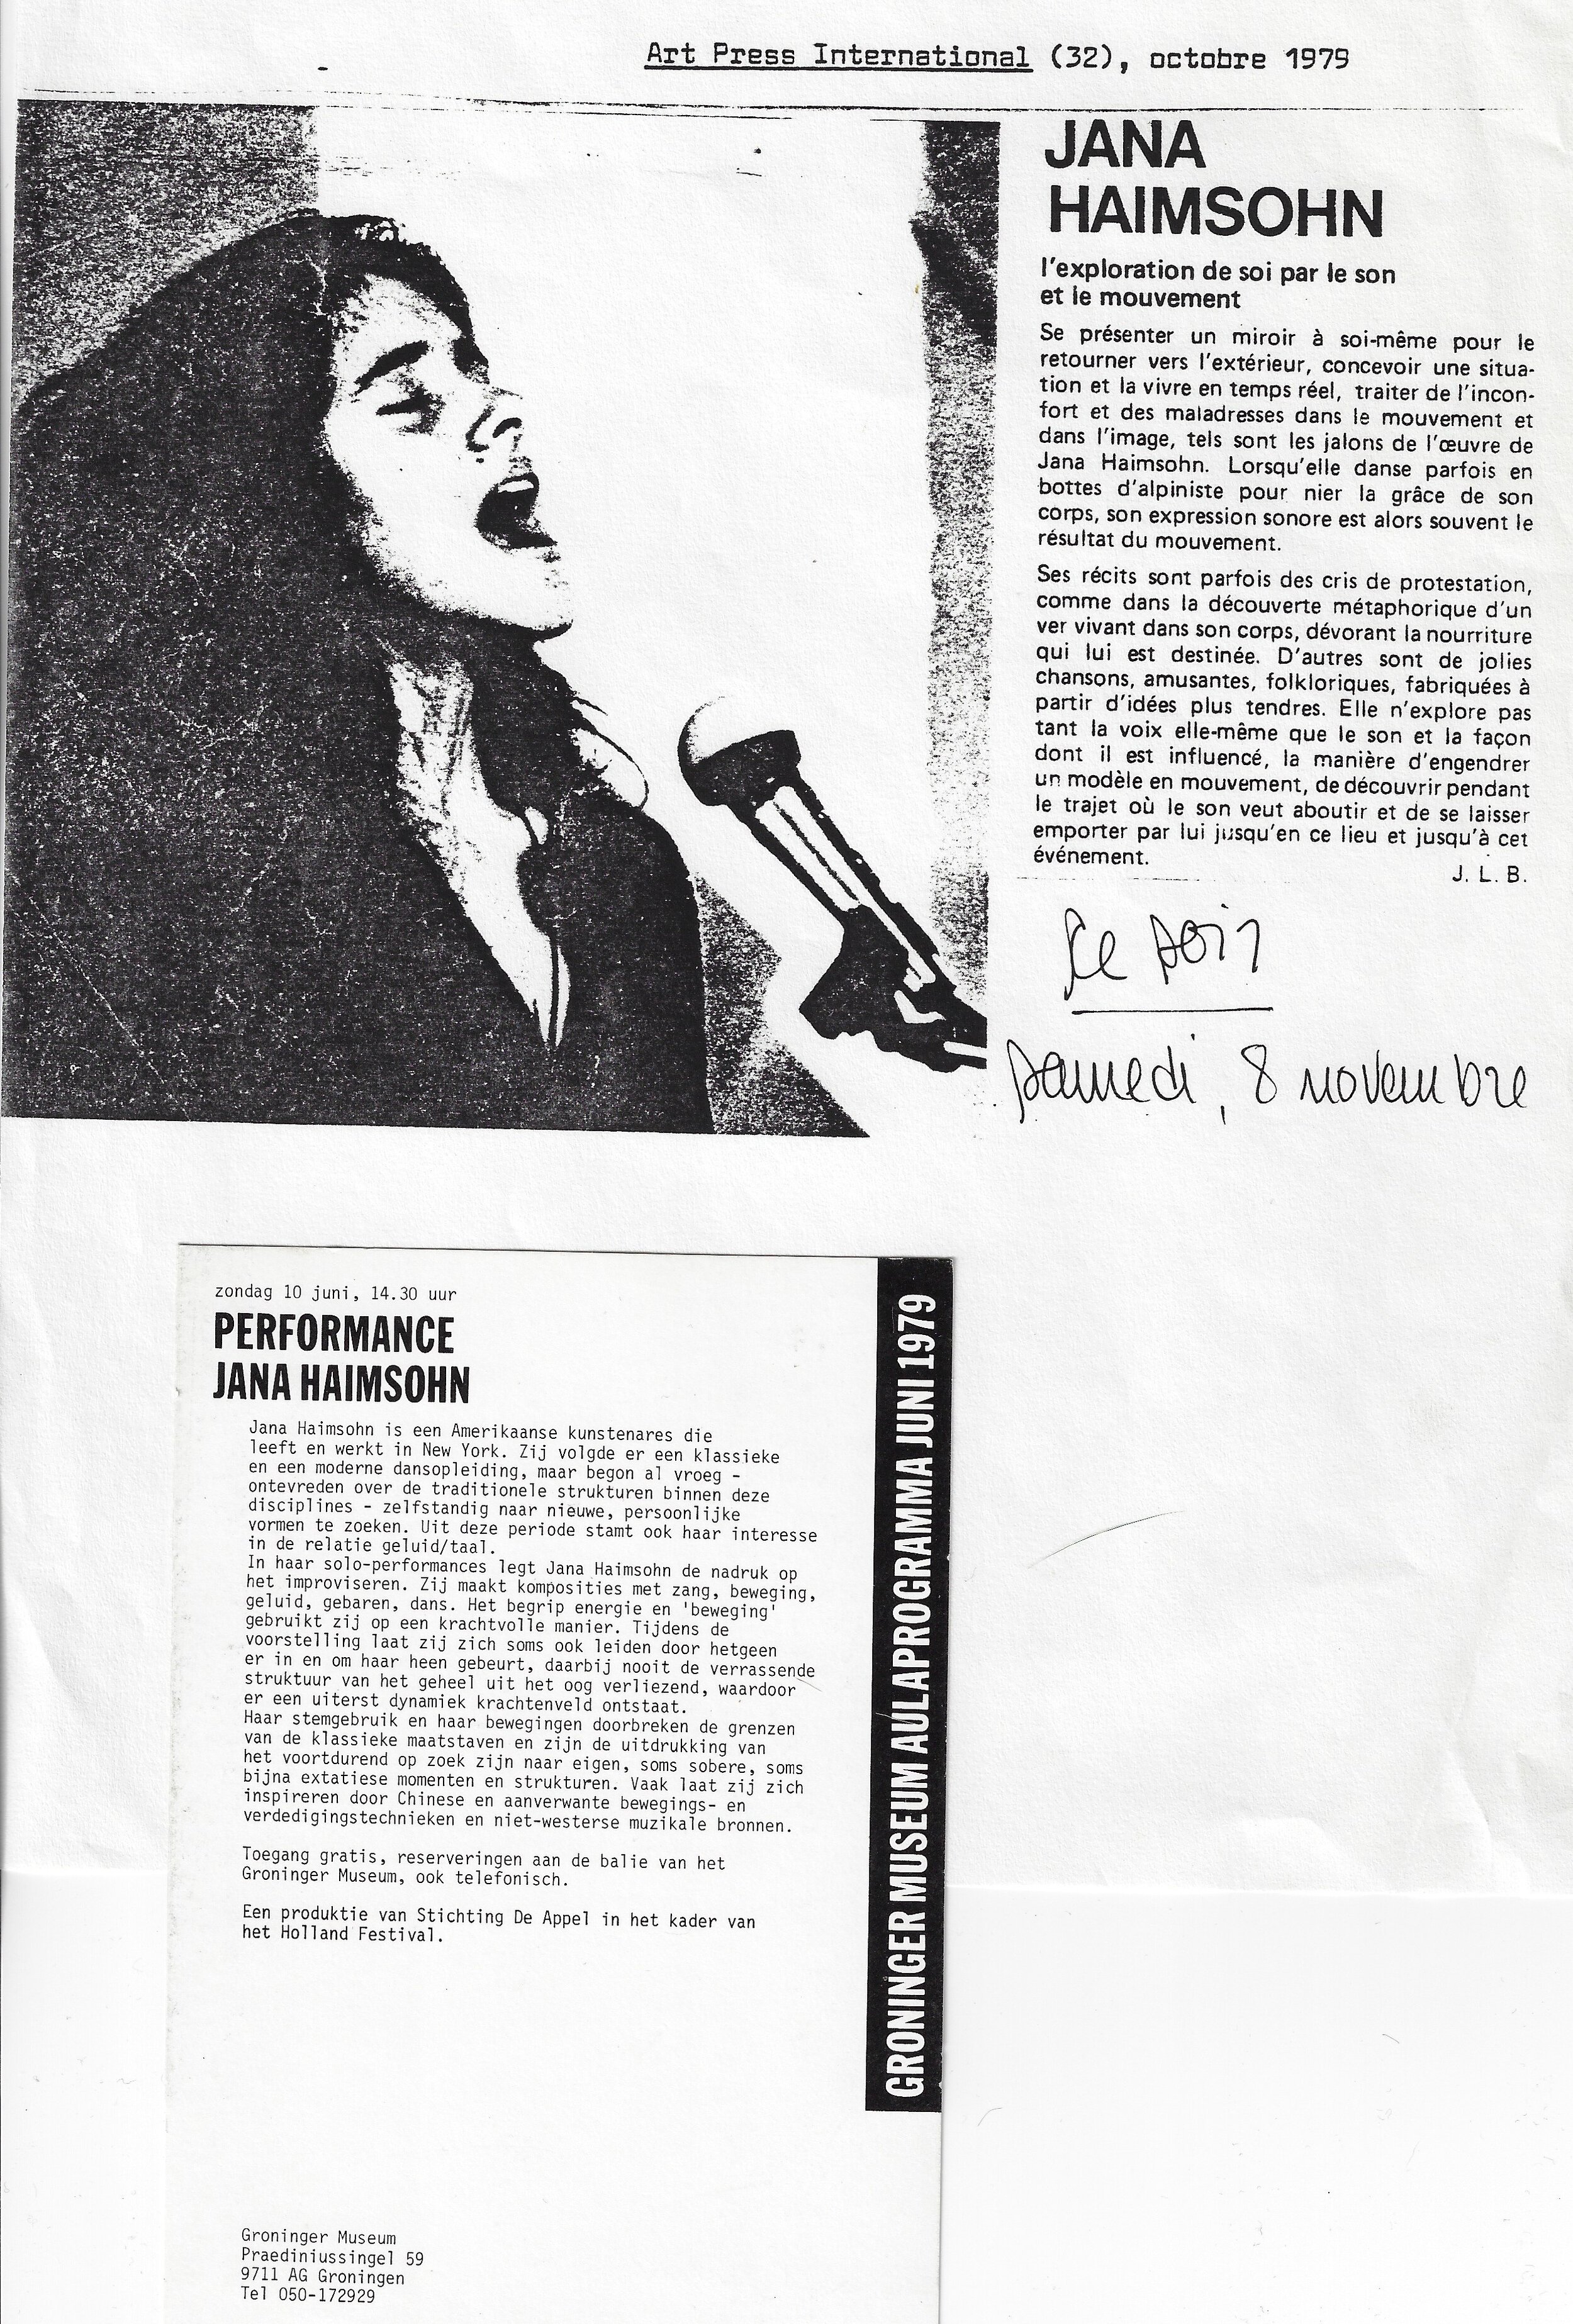 1979 - Art Press International & Gronninger Museum Aulaprogramma.jpg